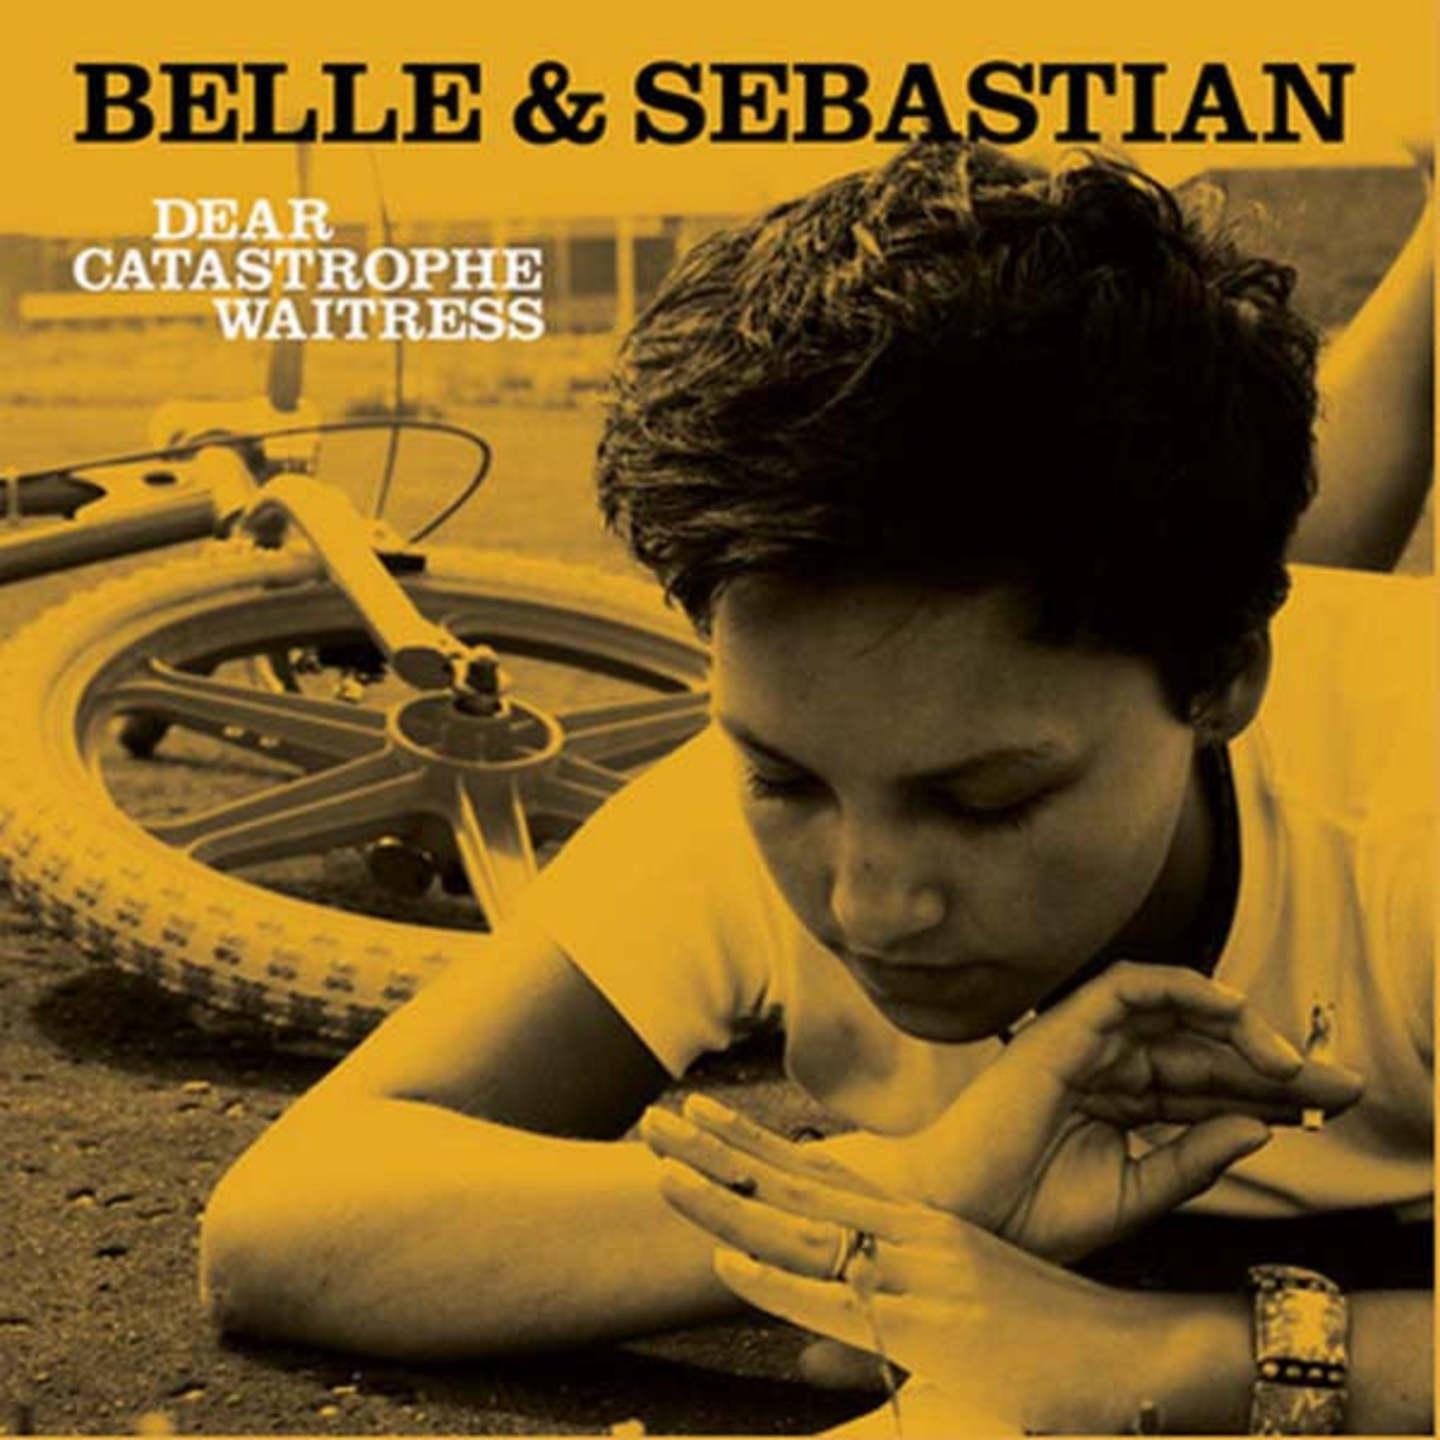 BELLE AND SEBASTIAN - Dear Catastrophe Waitress 2xLP